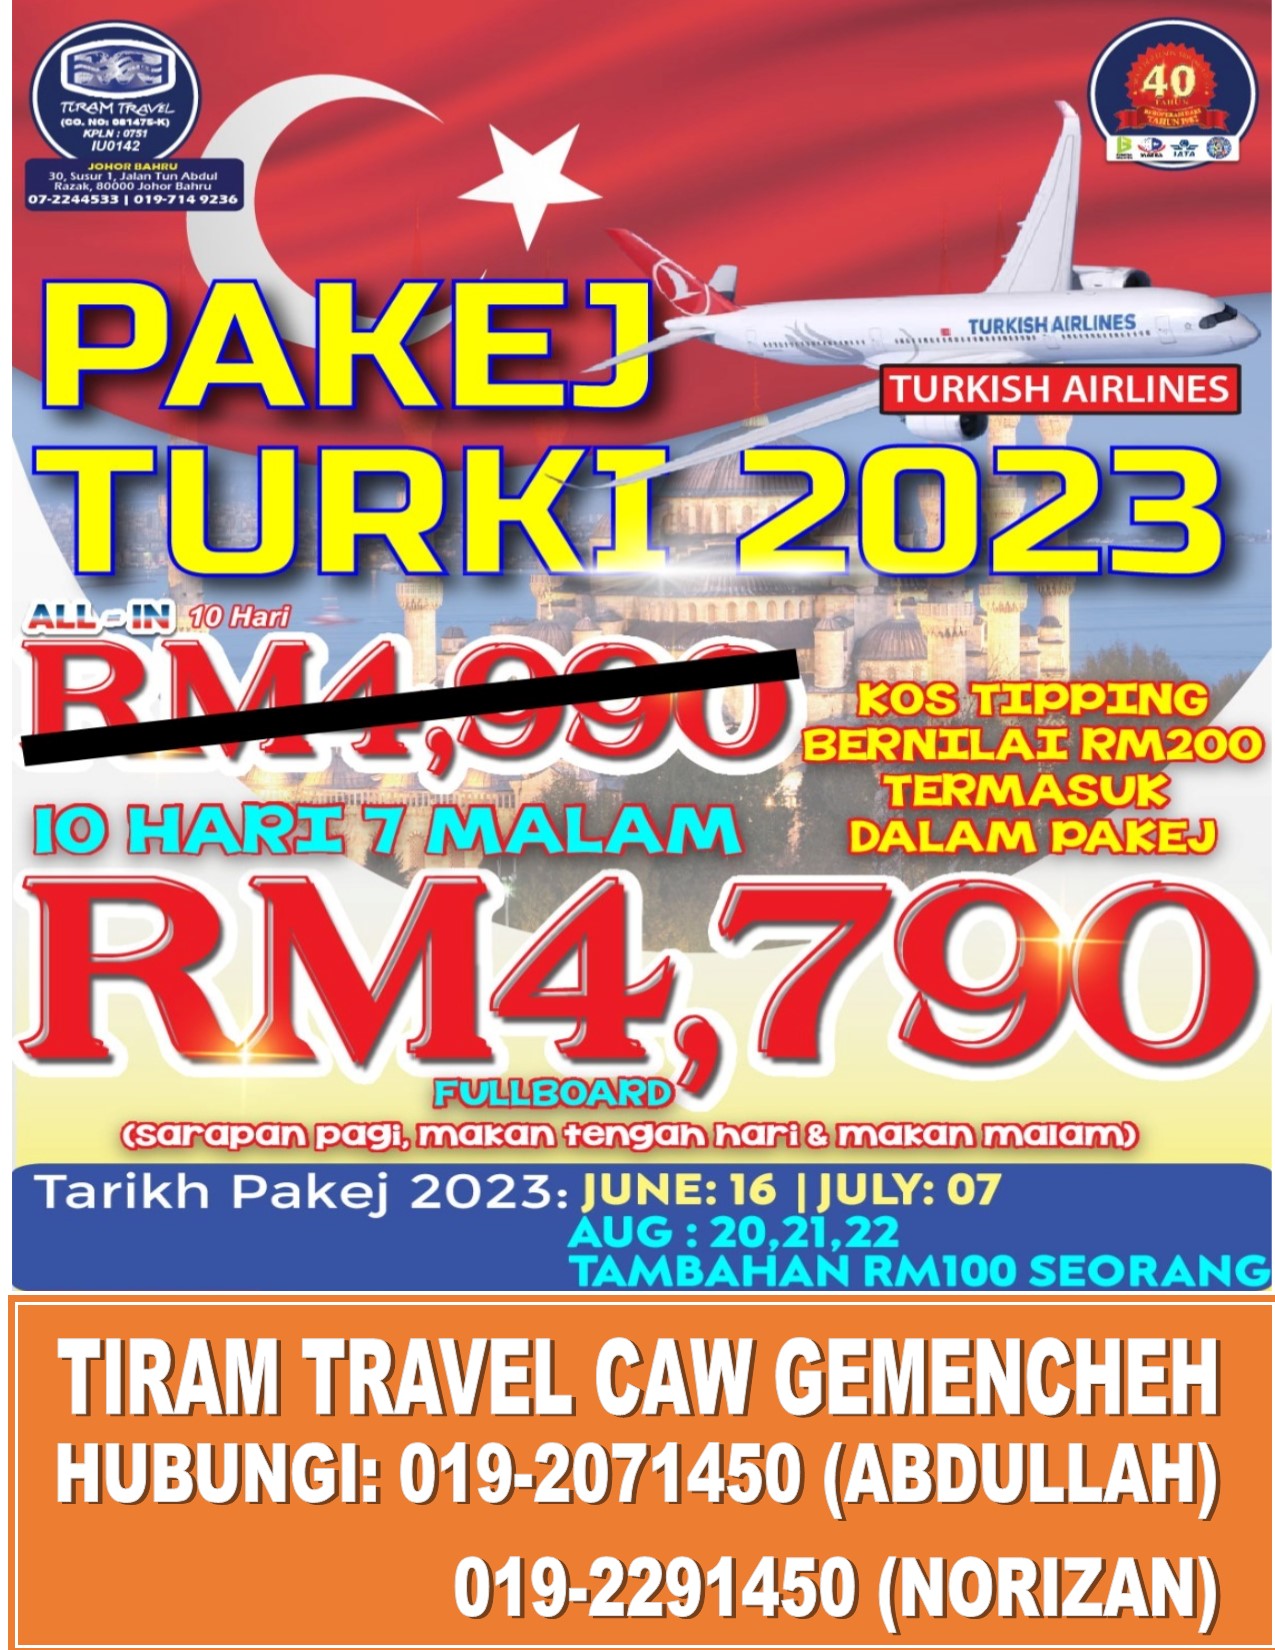 tiram travel turki 2022